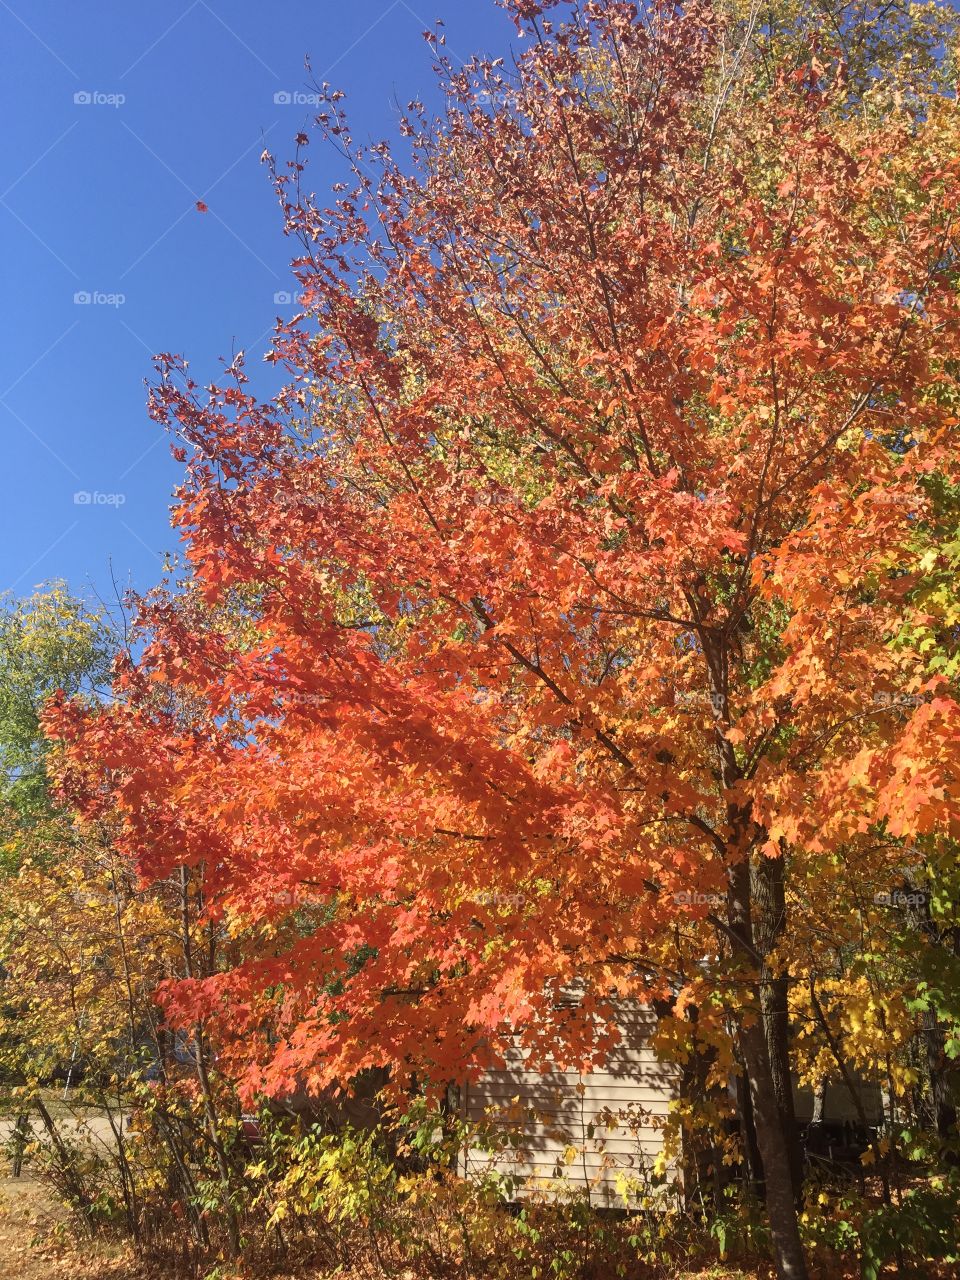 Beautiful Trees in Fall Colors 